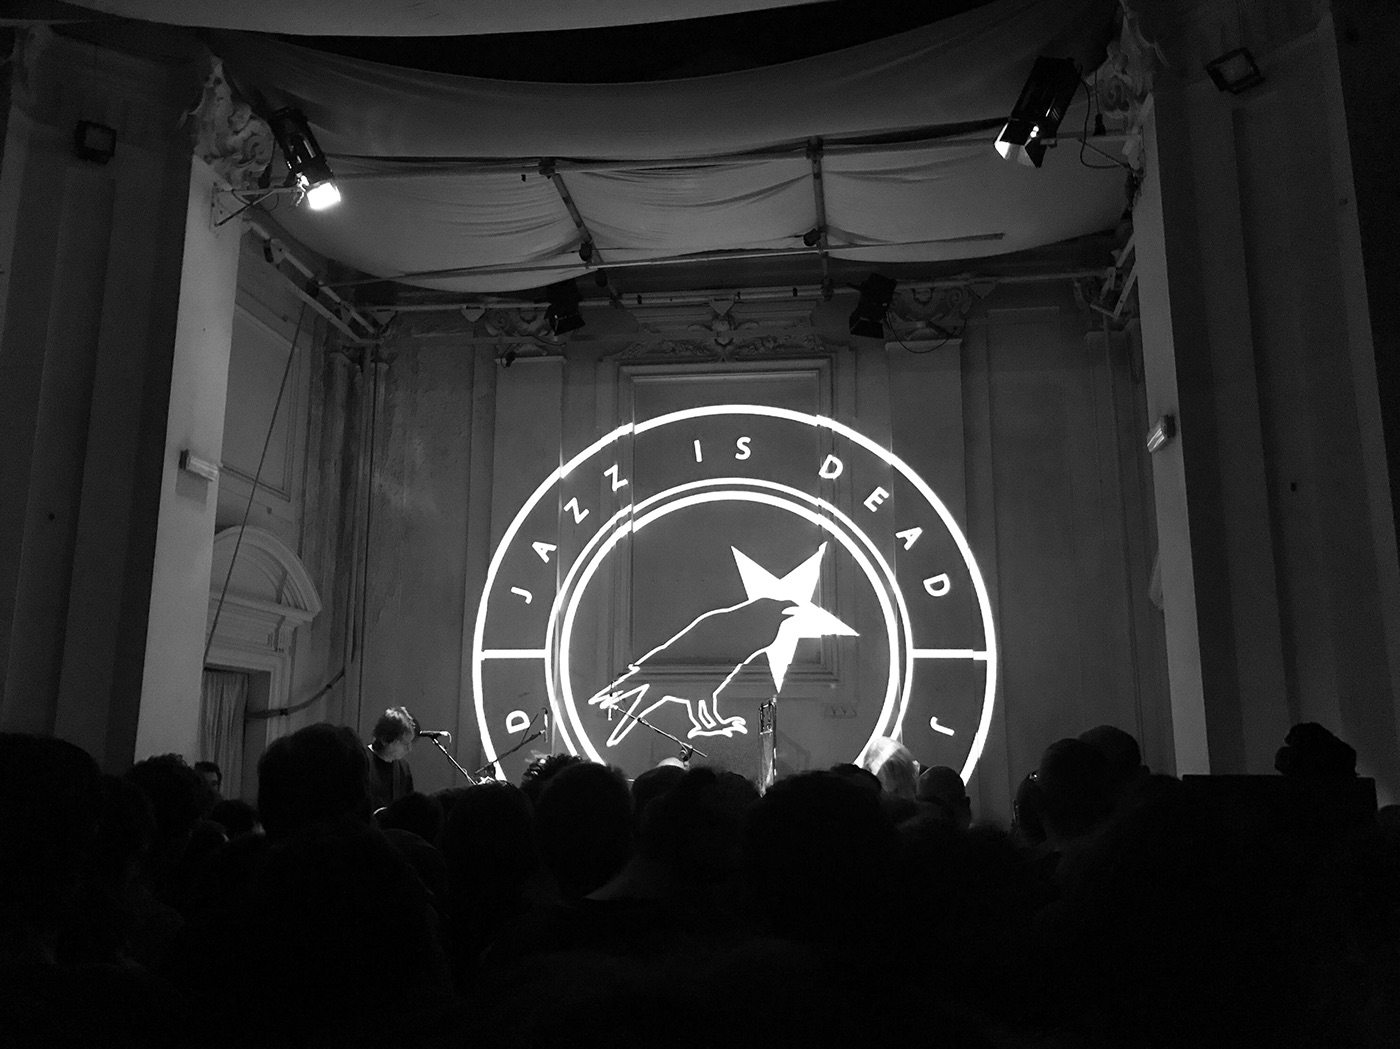 graphic graphic identity design festival jazz torino Turin Italy logo Events